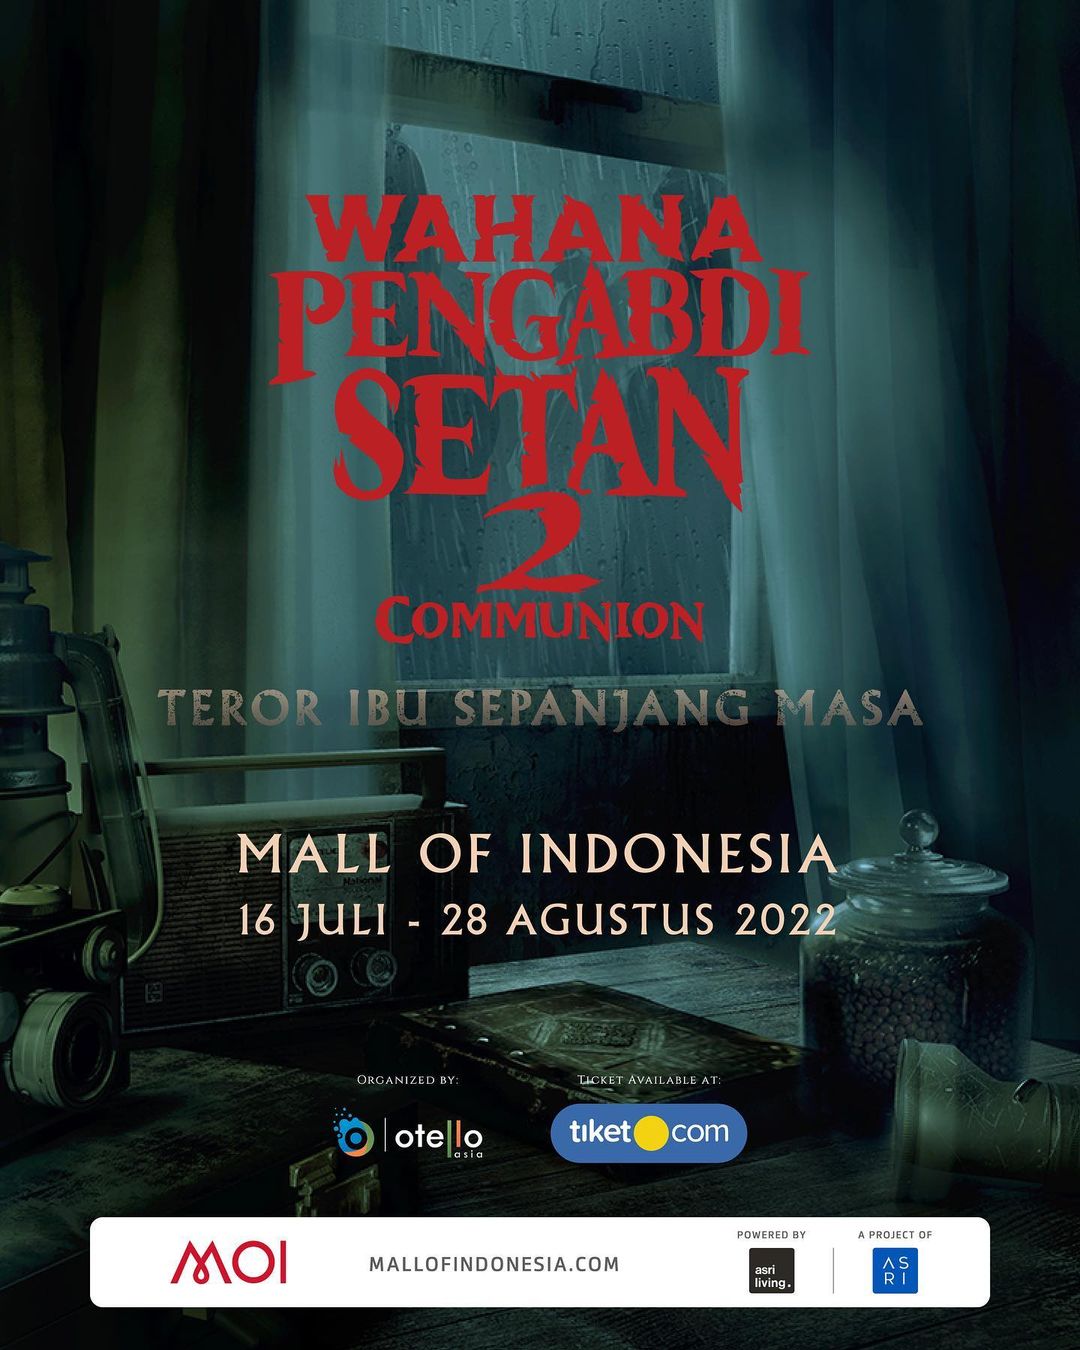 WAHANA PENGABDI SETAN 2 di MALL OF INDONESIA